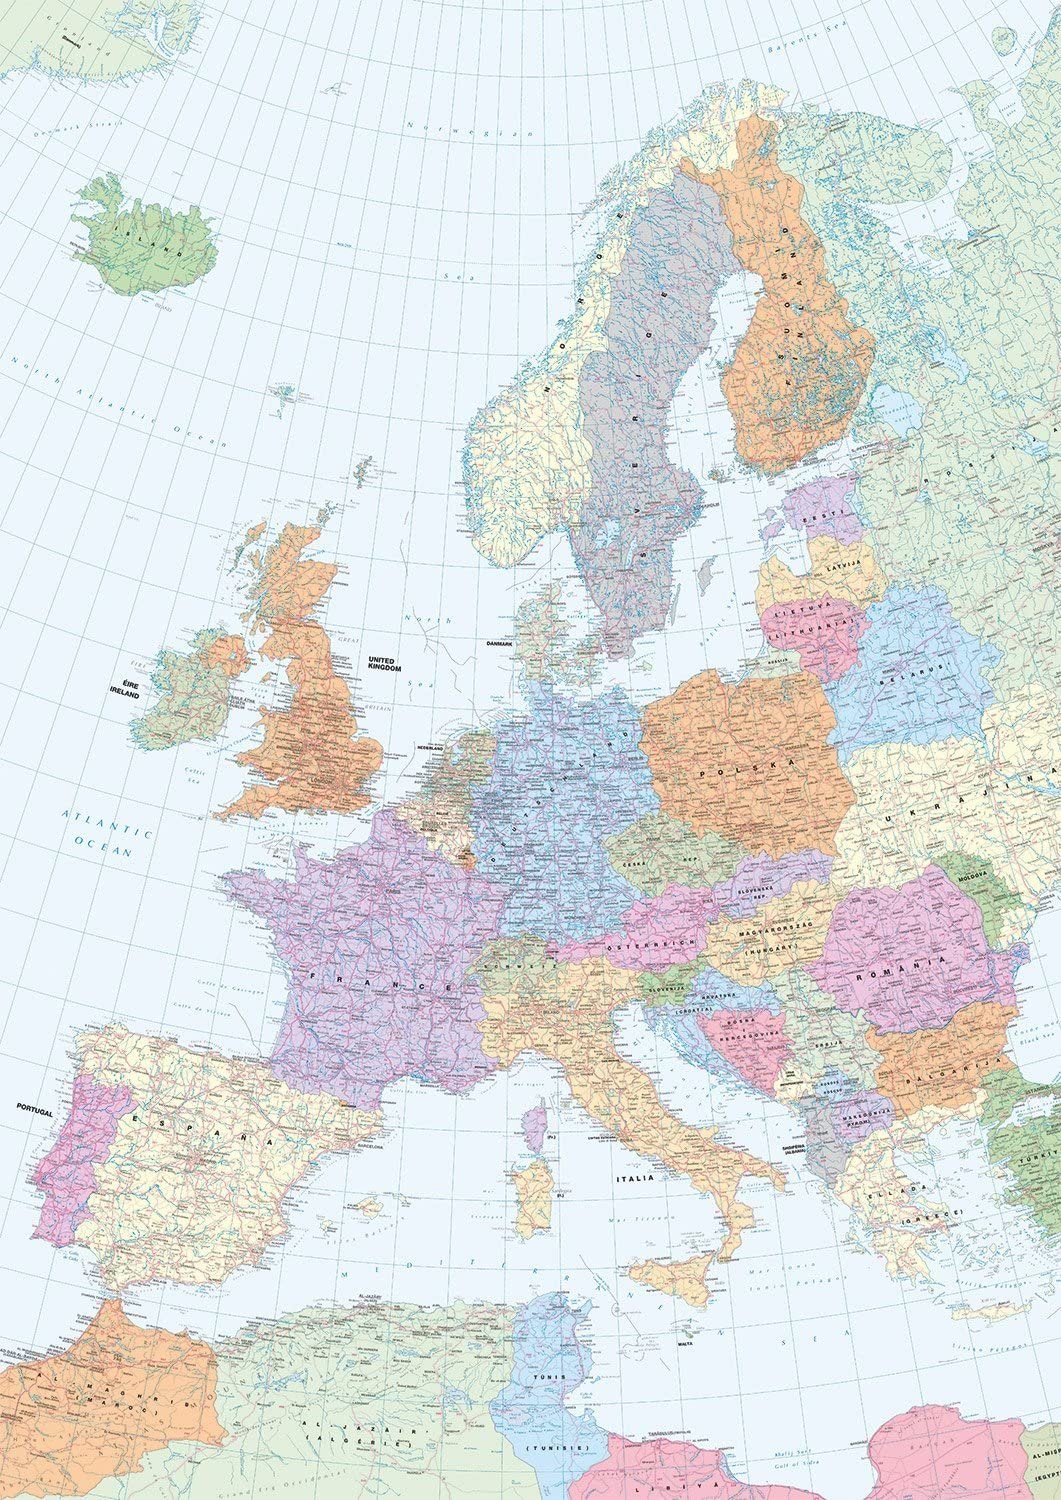 Extragoods Puzzle Europa Puzzle / EU Karte 1000 Teile - Die gesamte EU 68 x  48 cm, 1000 Puzzleteile